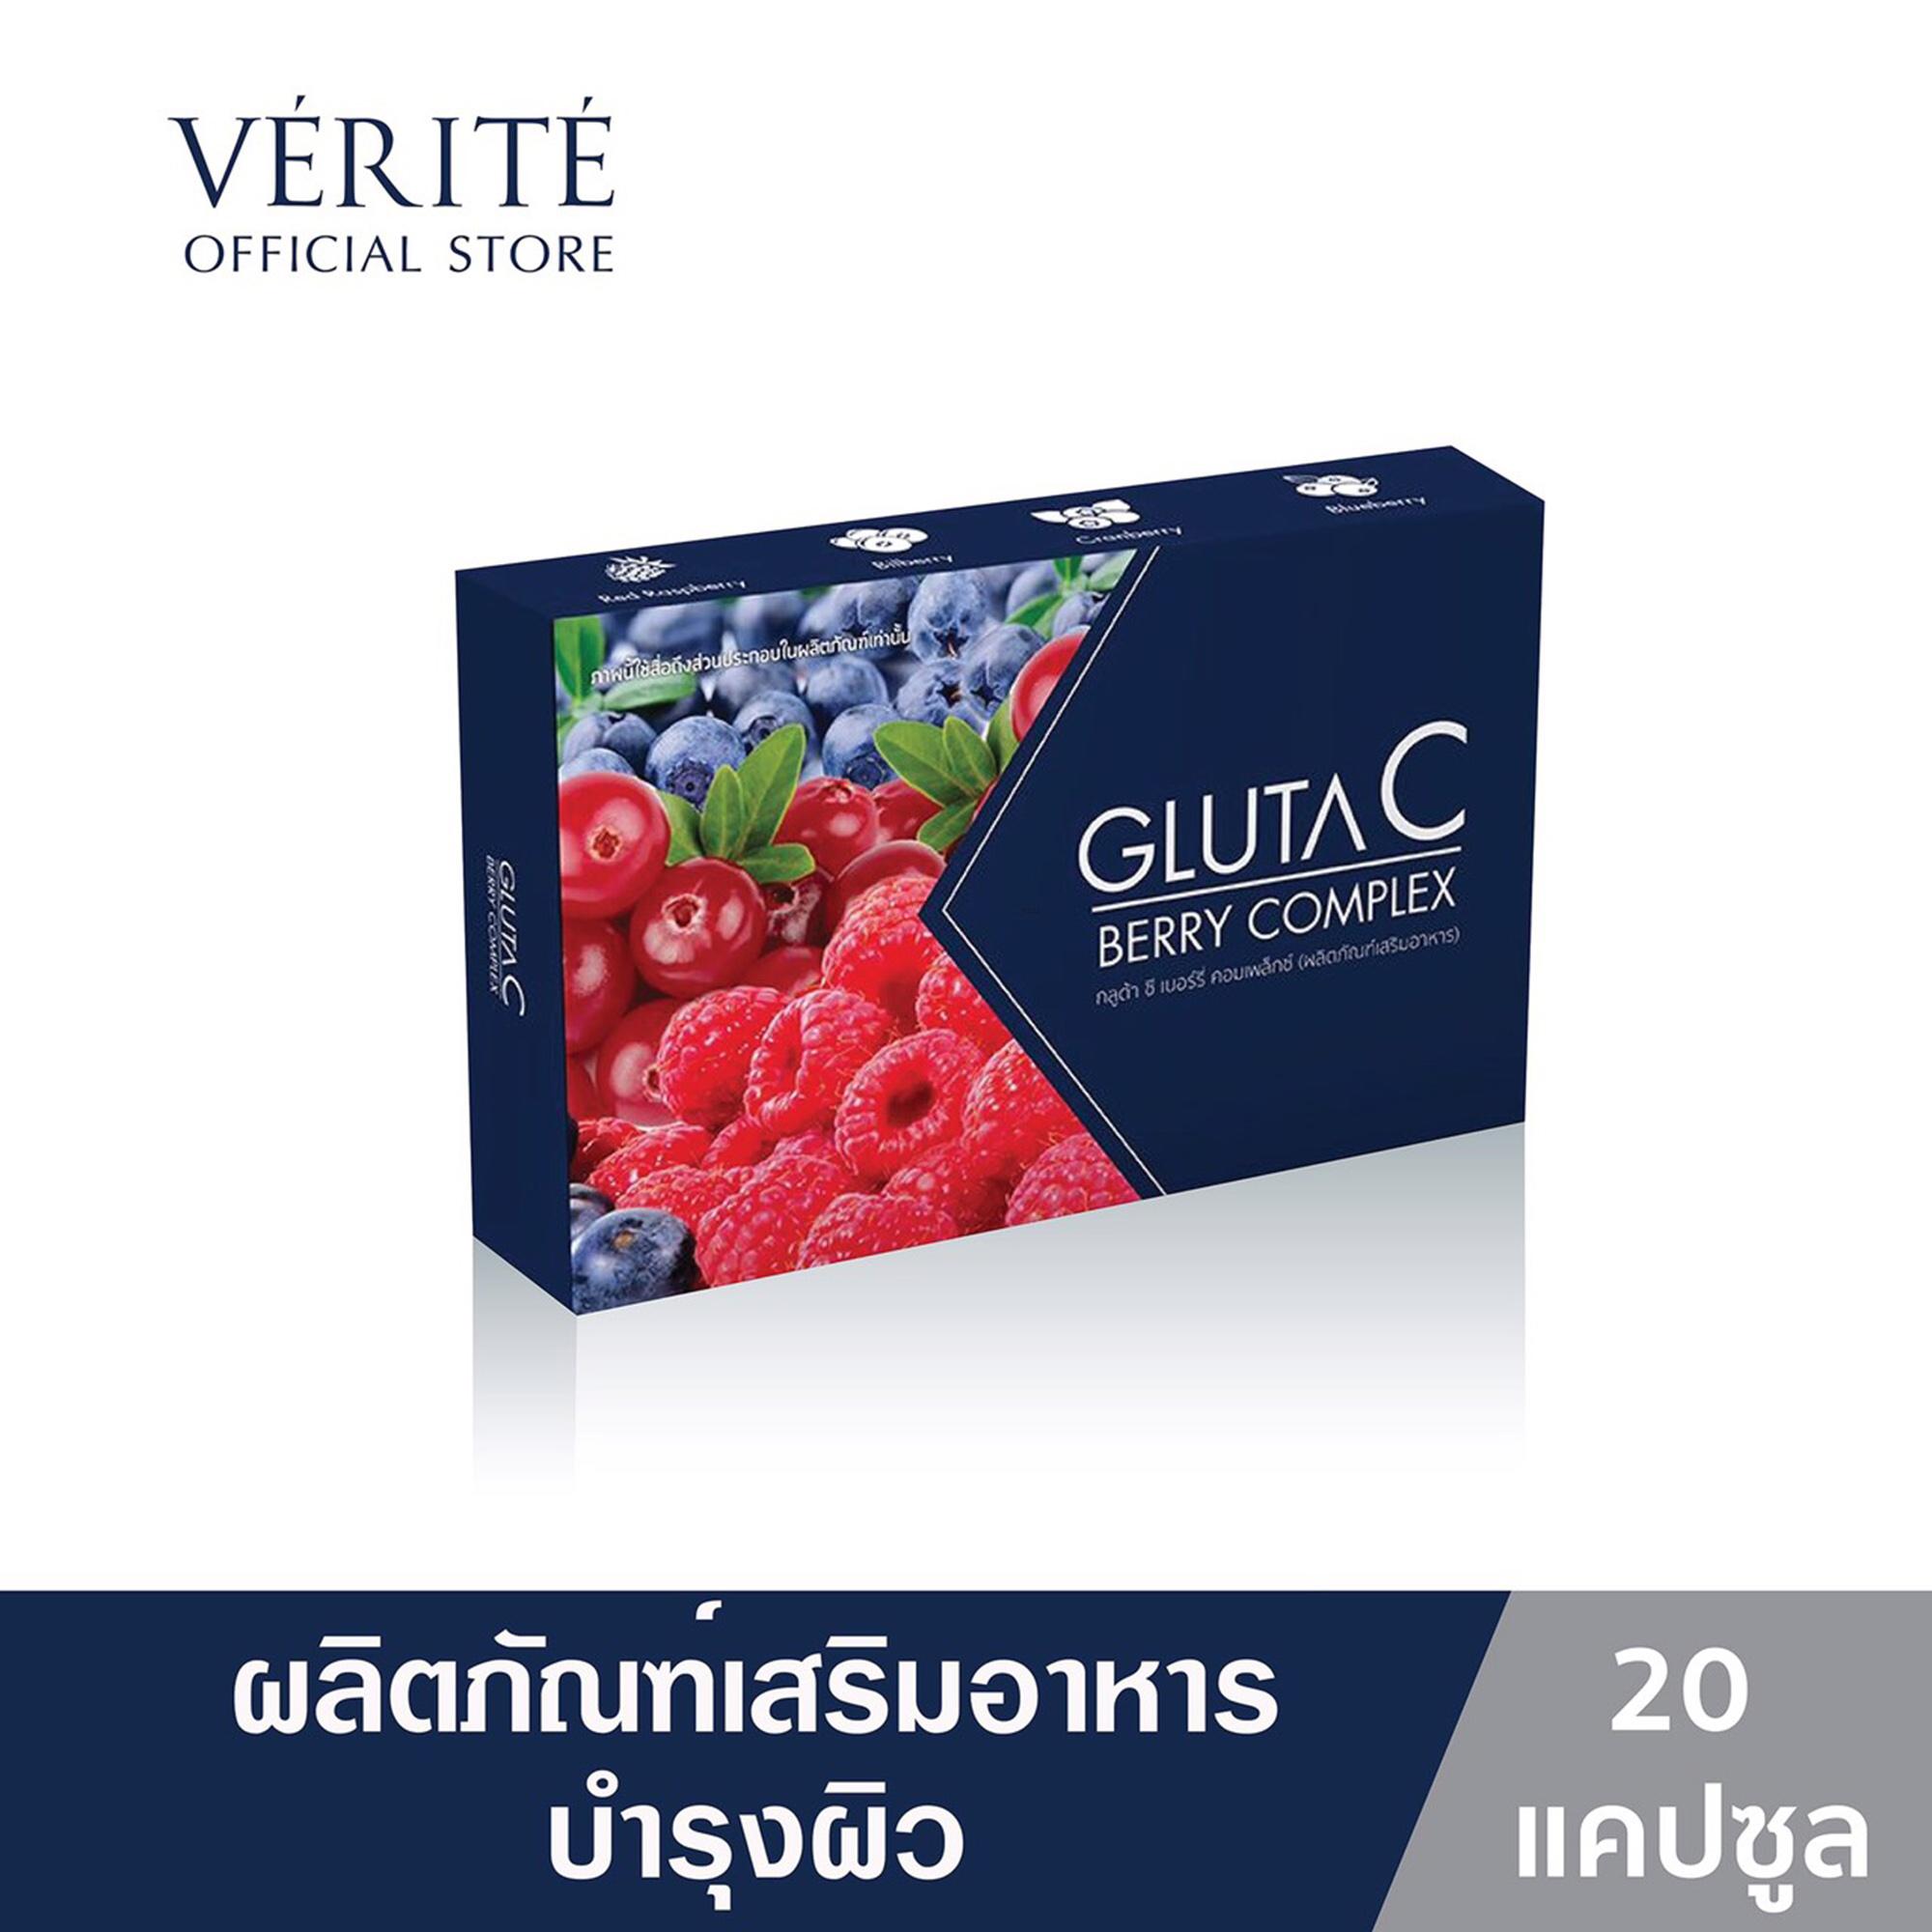 Verite Gluta C Berry Complex 20 Capsules เวอริเต้ กลูต้า ซี เบอร์รี่ คอมเพล็กซ์ 20 แคปซูล ผลิตภัณฑ์เสริมอาหารบำรุง